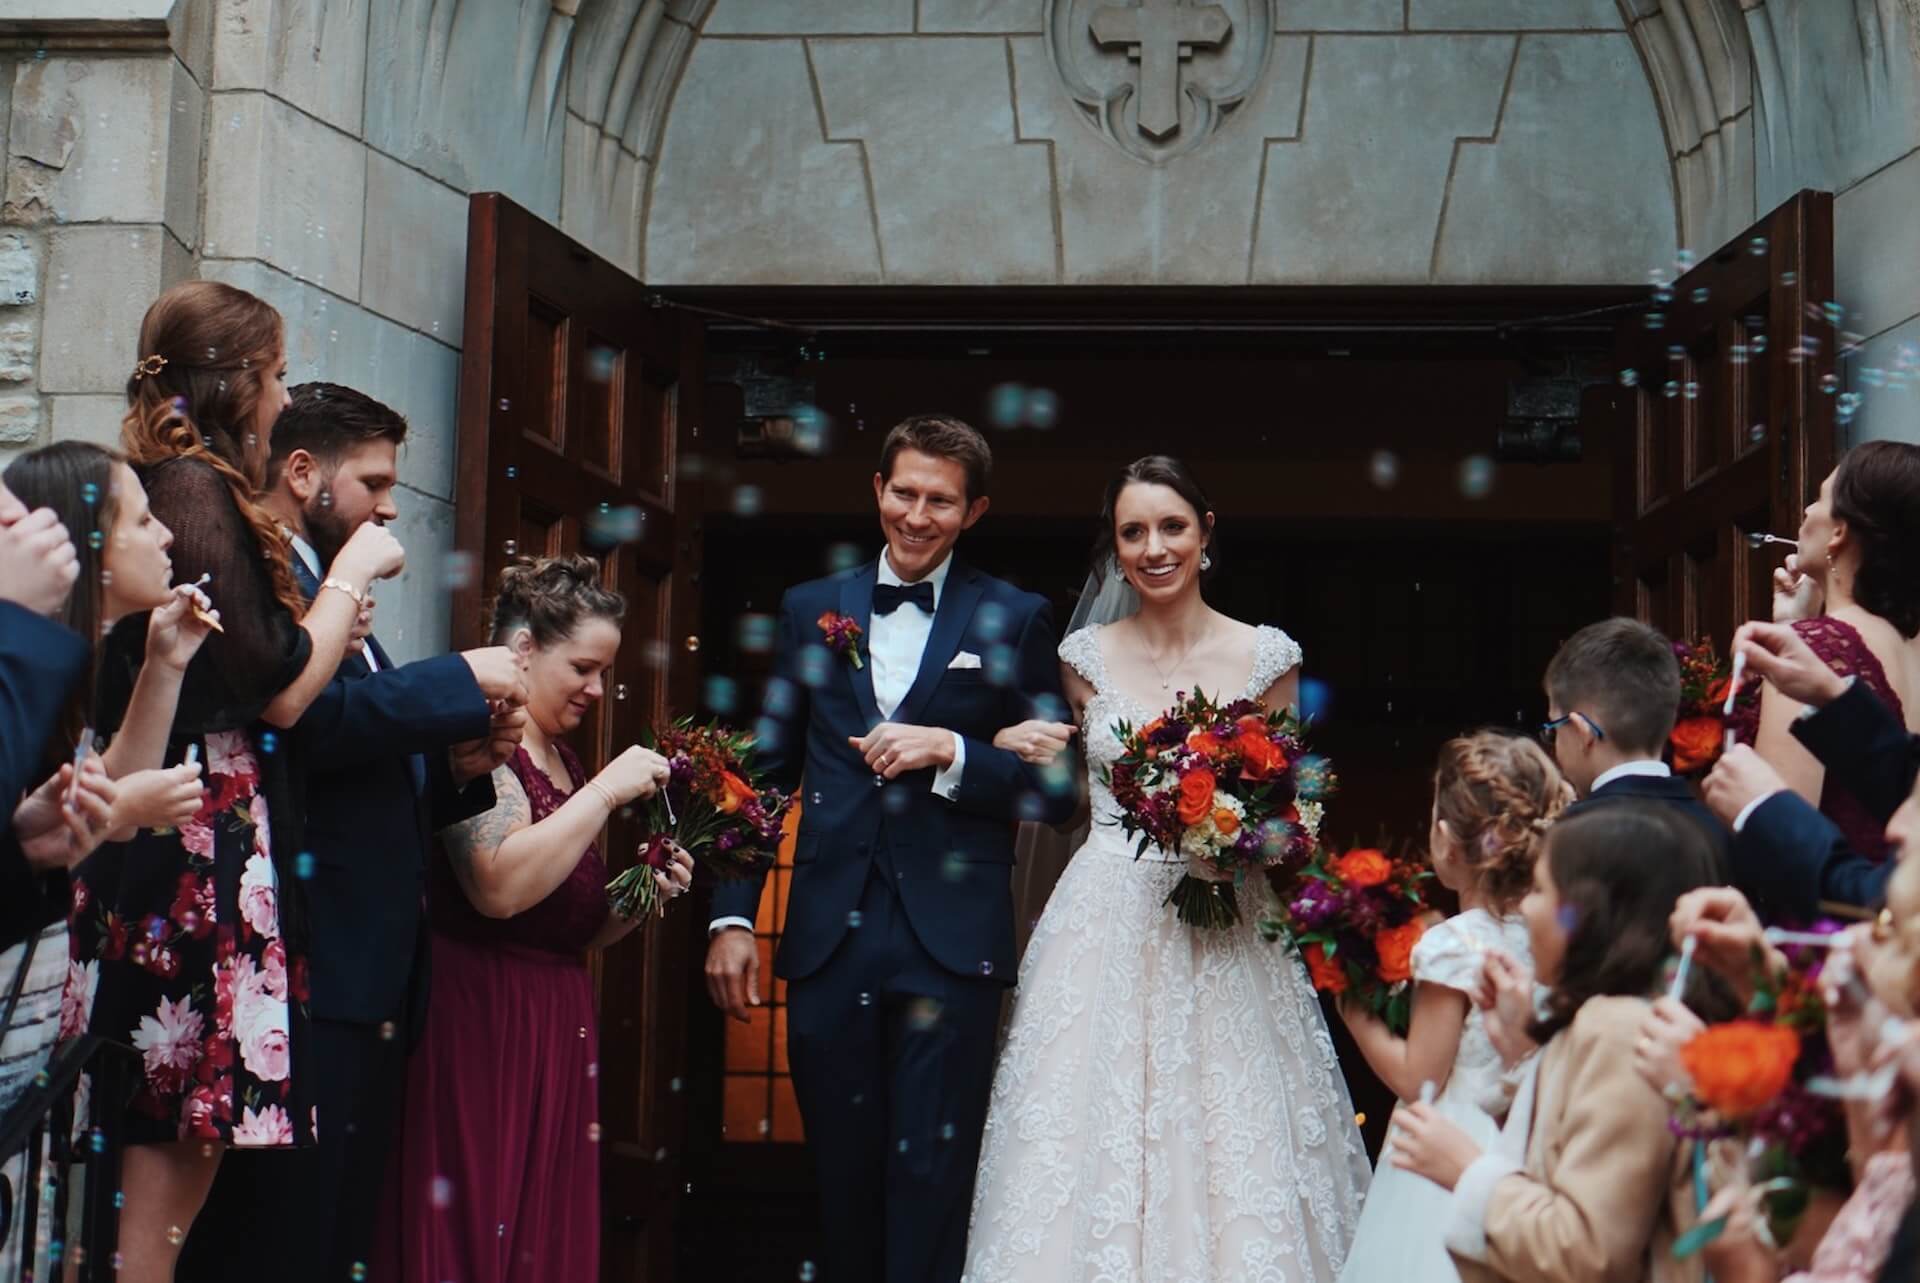 The 10 best WordPress plug-ins for wedding photographers